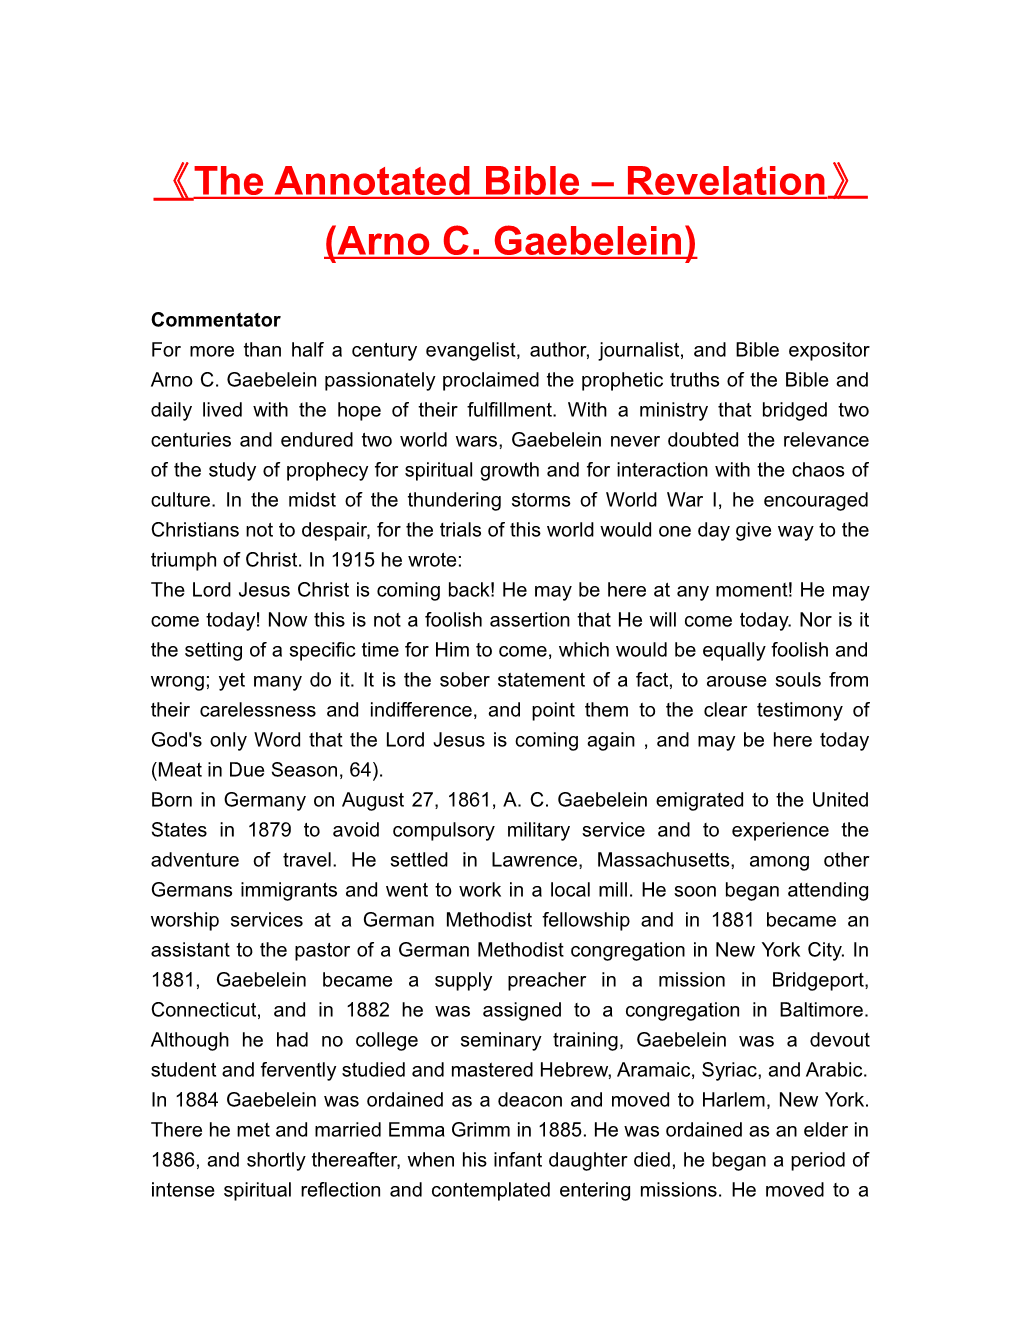 The Annotated Bible Revelation (Arno C. Gaebelein)